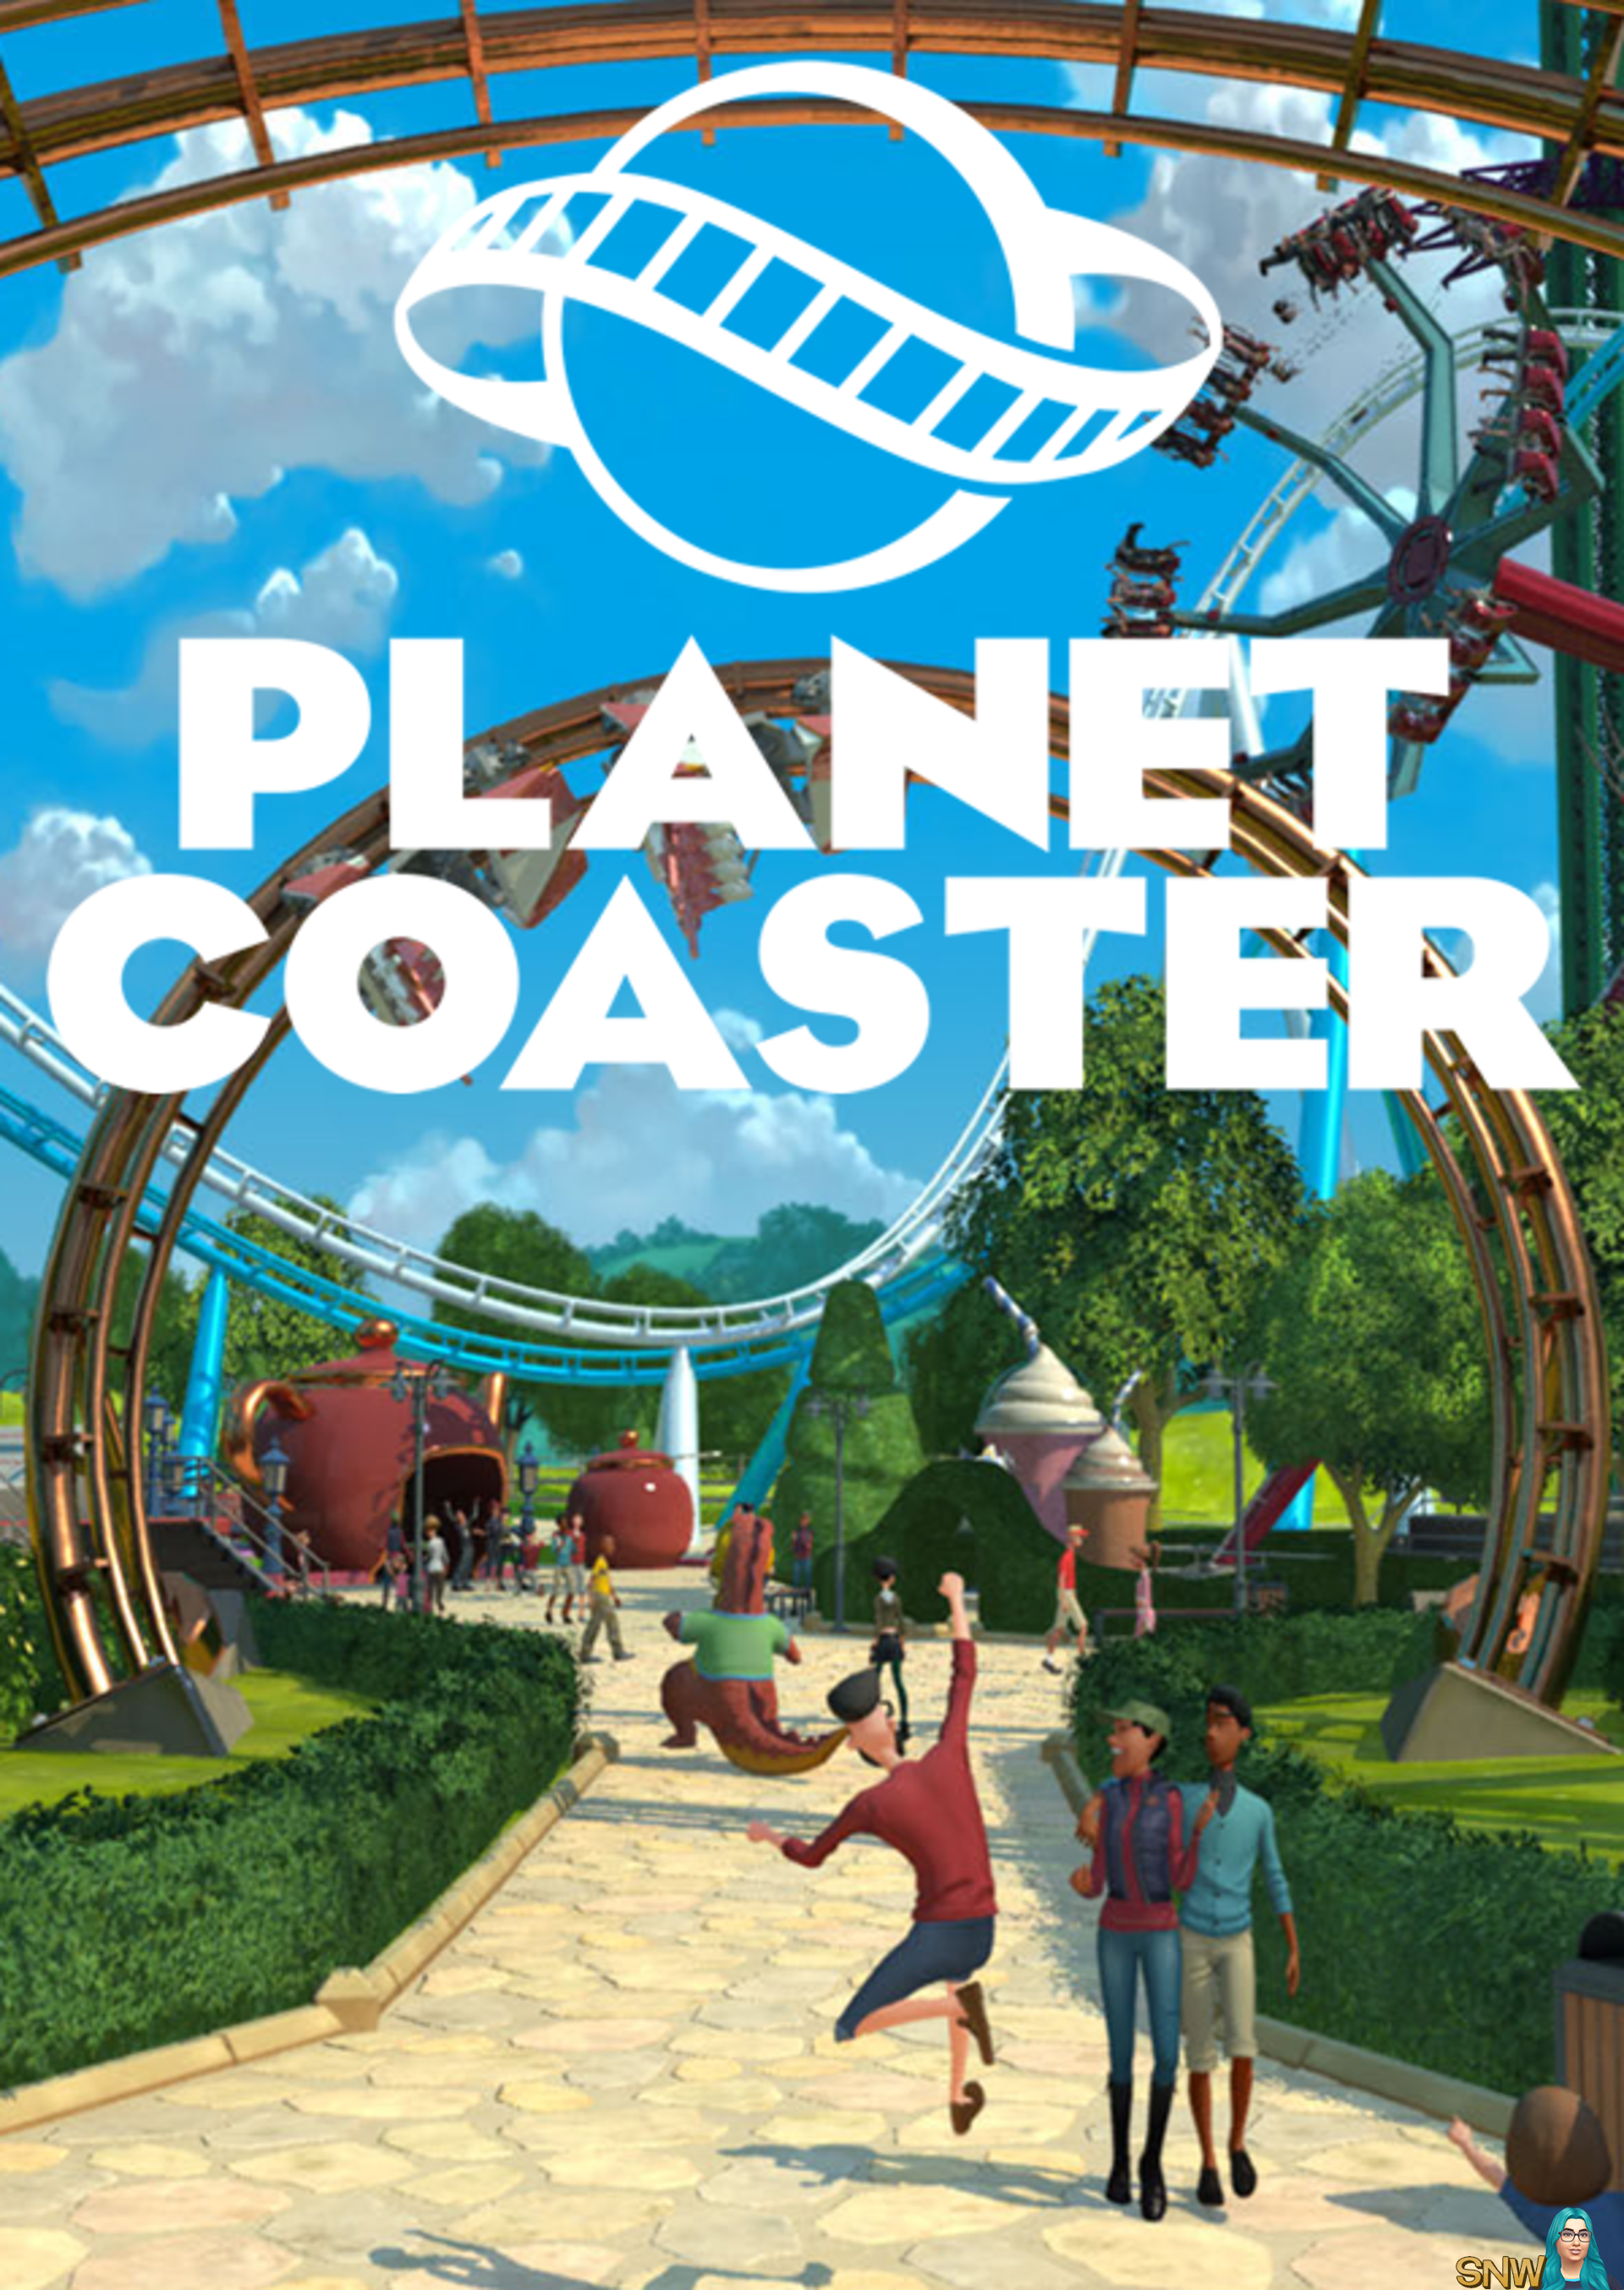 planet coaster download free